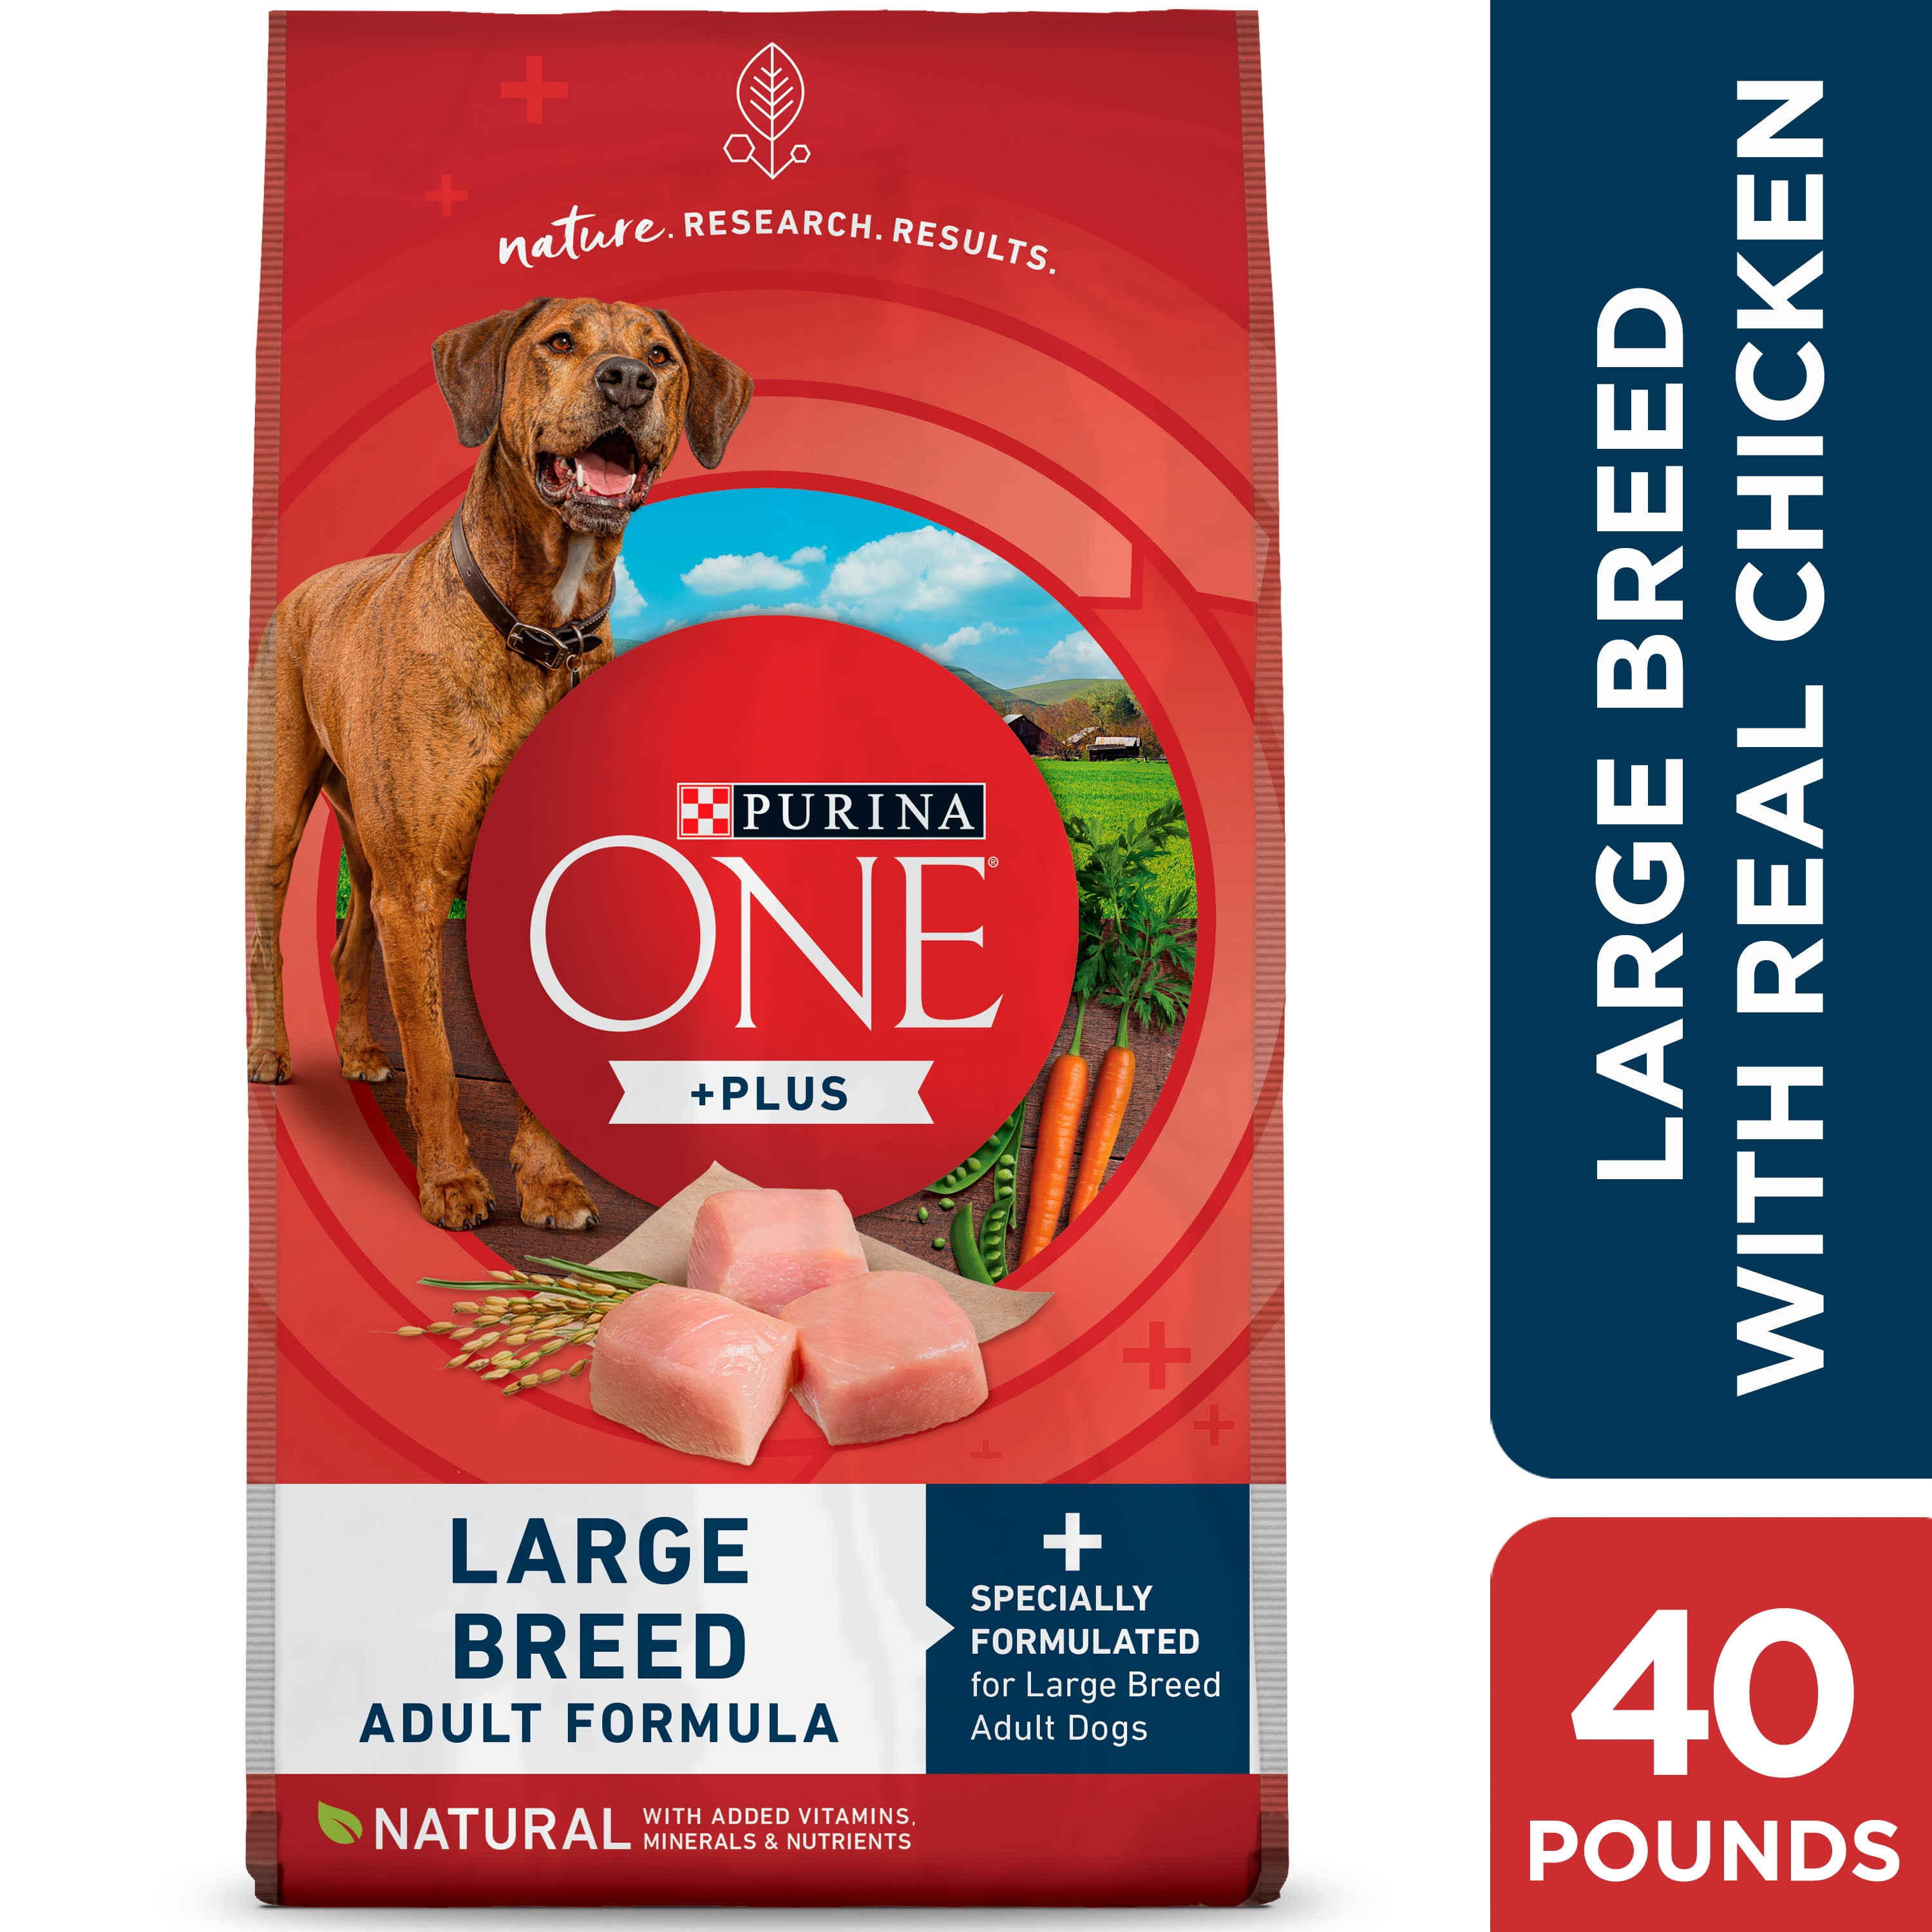 Purina ONE Natural Large Breed Adult Dry Dog Food, +Plus Formula, 40 lb